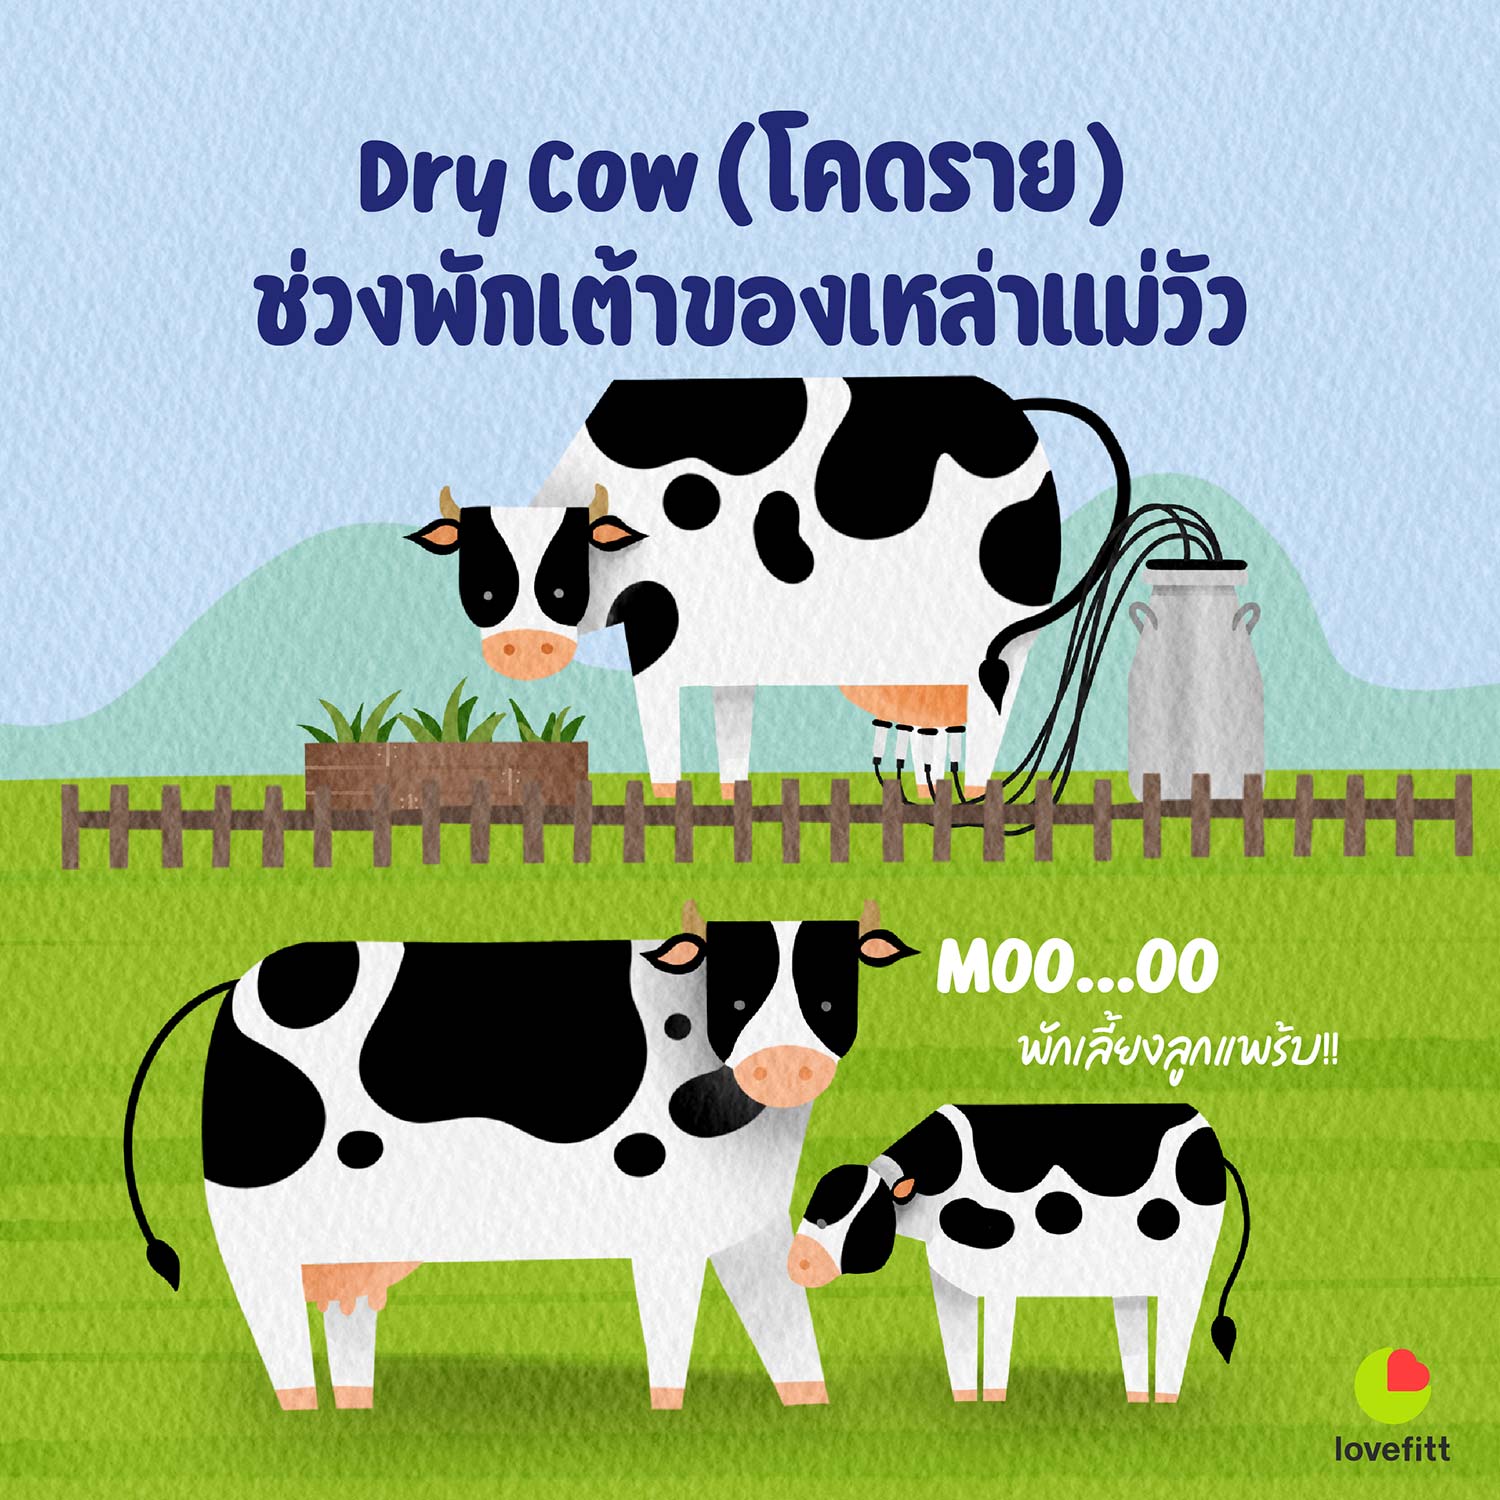 dry cow (โคดราย) คือช่วงพักเต้าของวัวนม